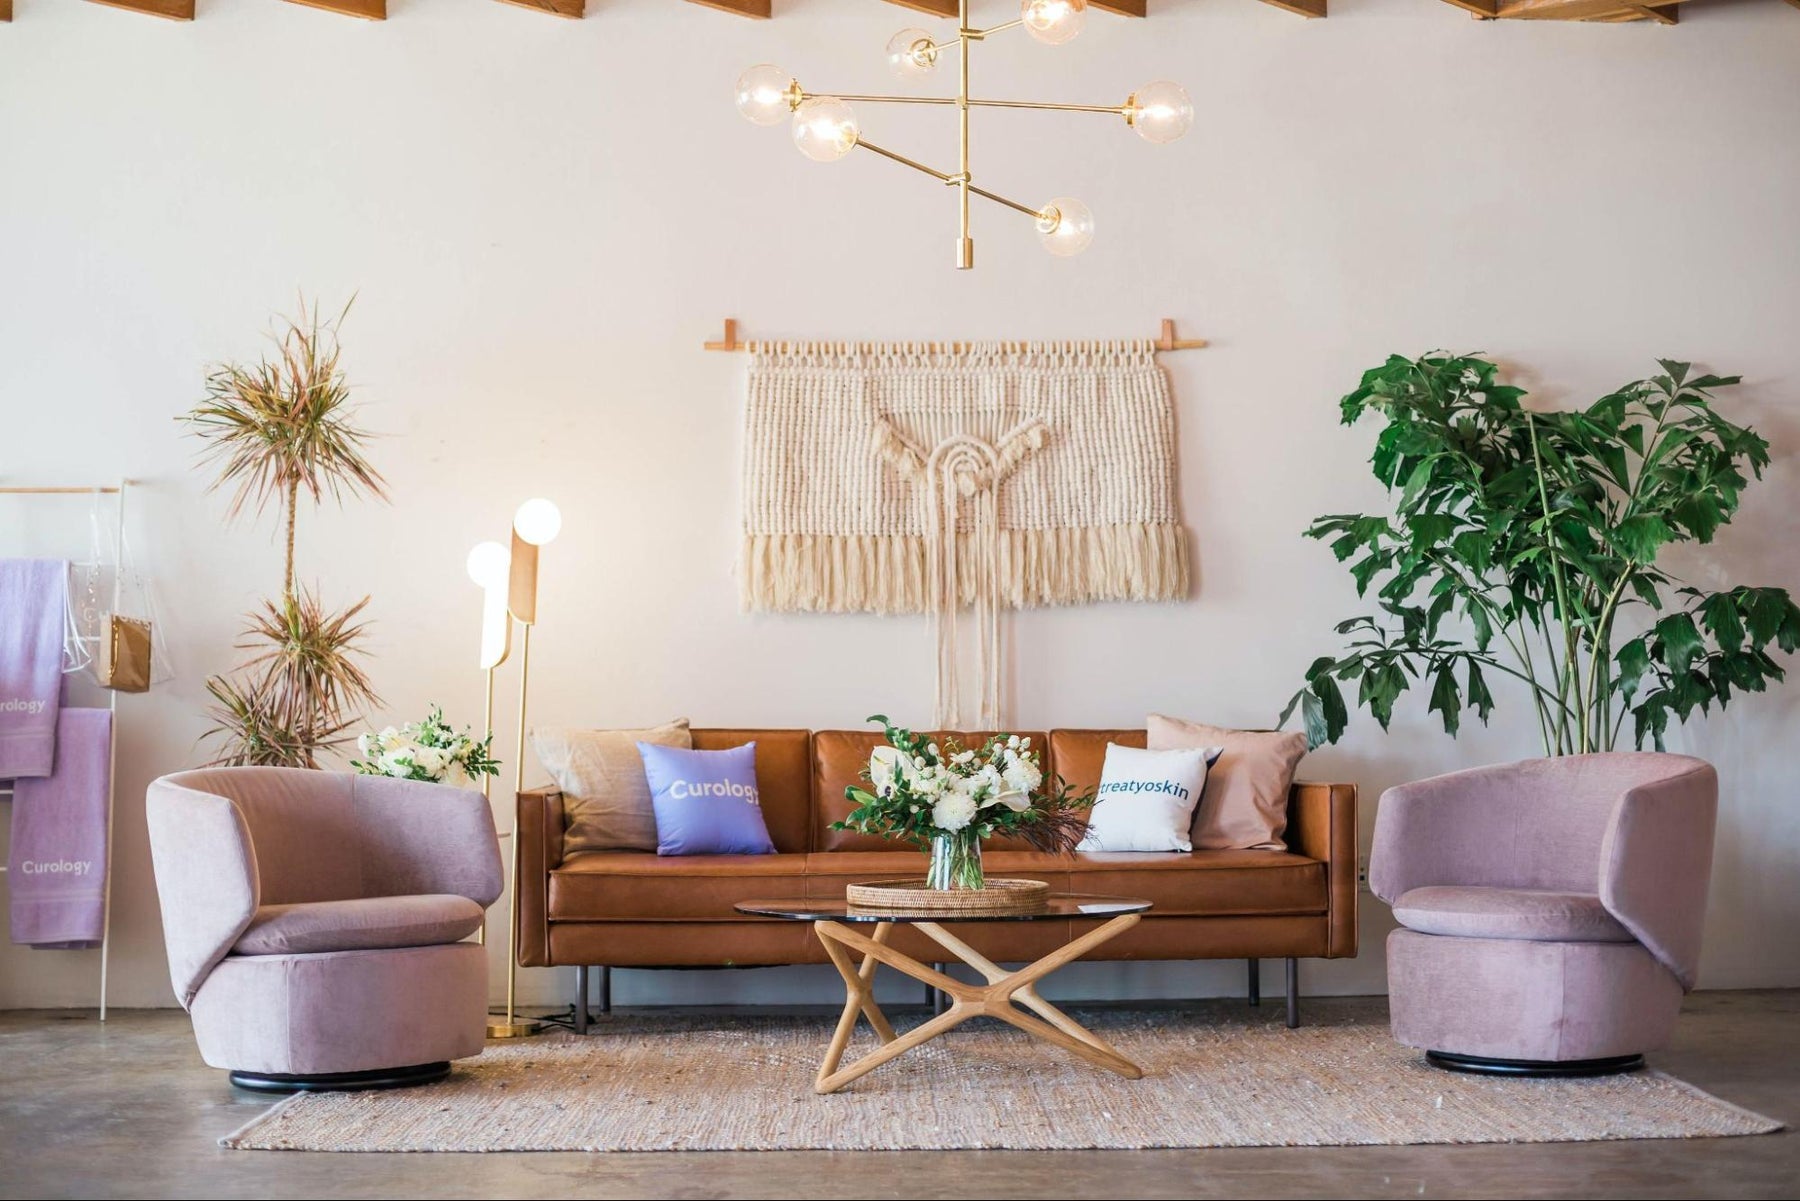 10 Bohemian Home Decor Ideas For Your Perfect Home Decor Interior